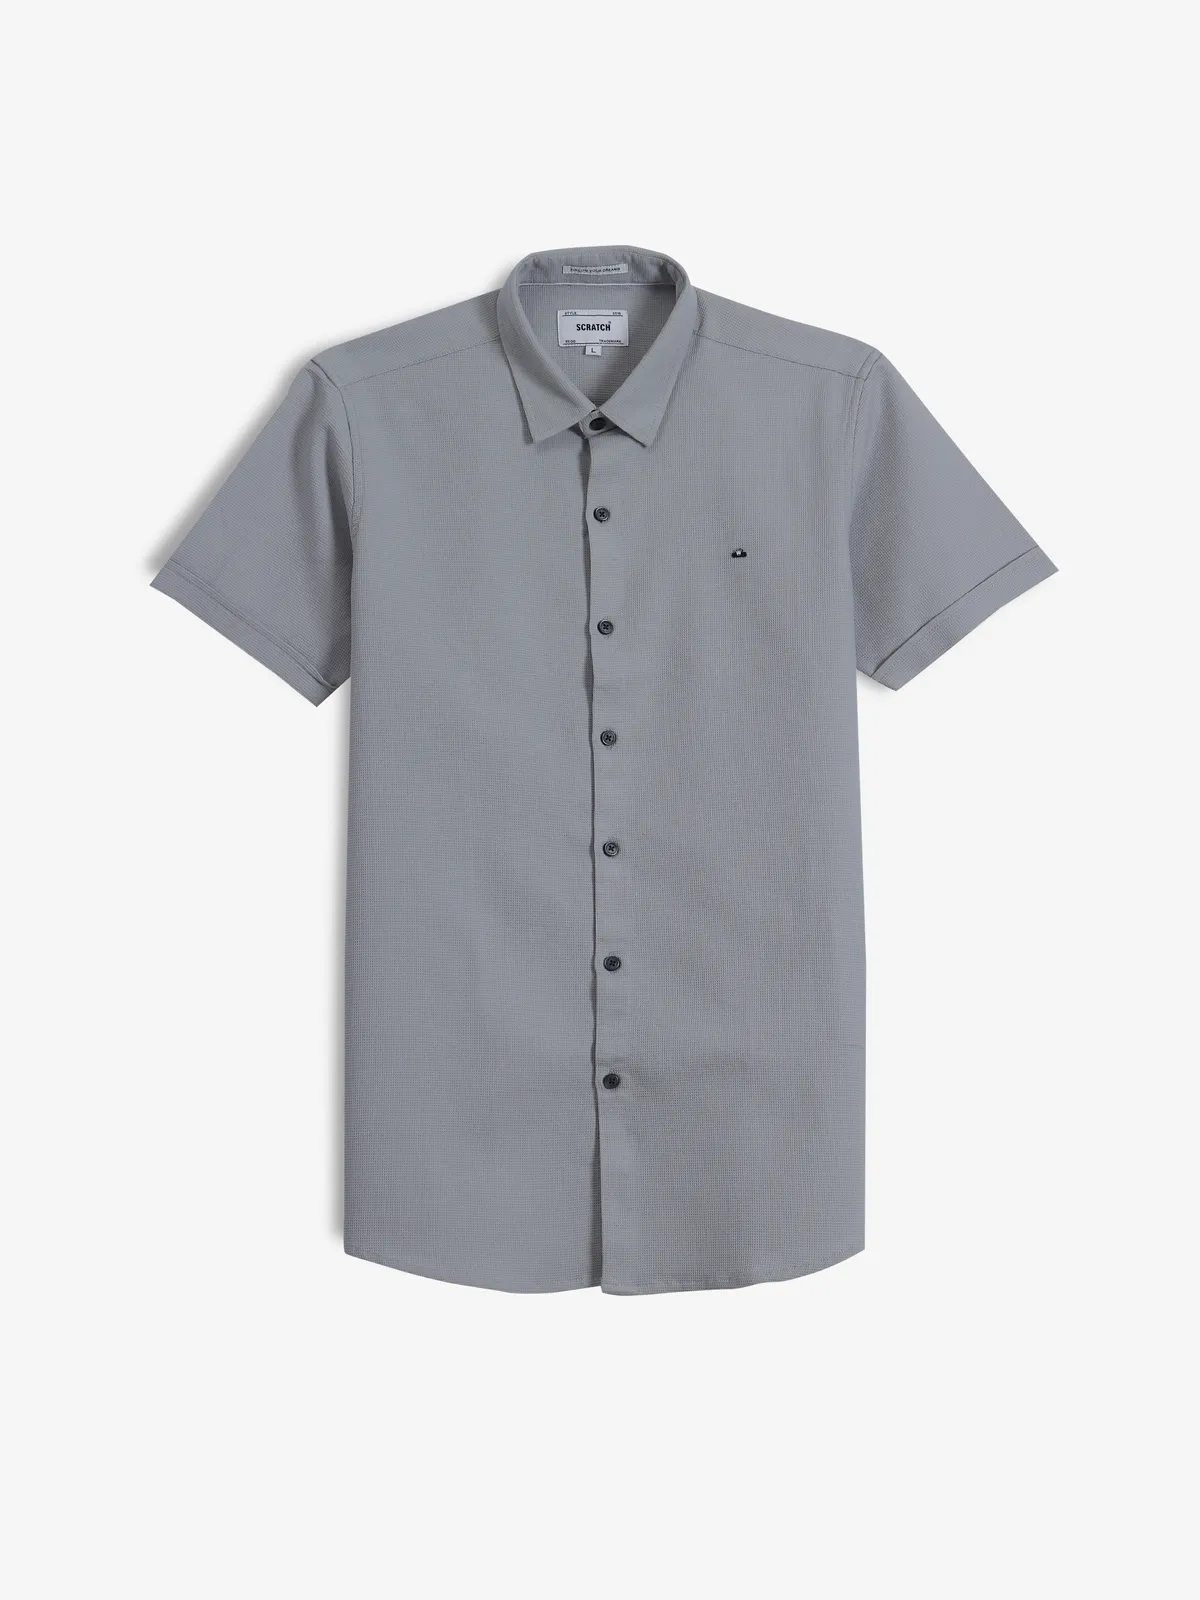 SCRATCH grey texture casual cotton shirt